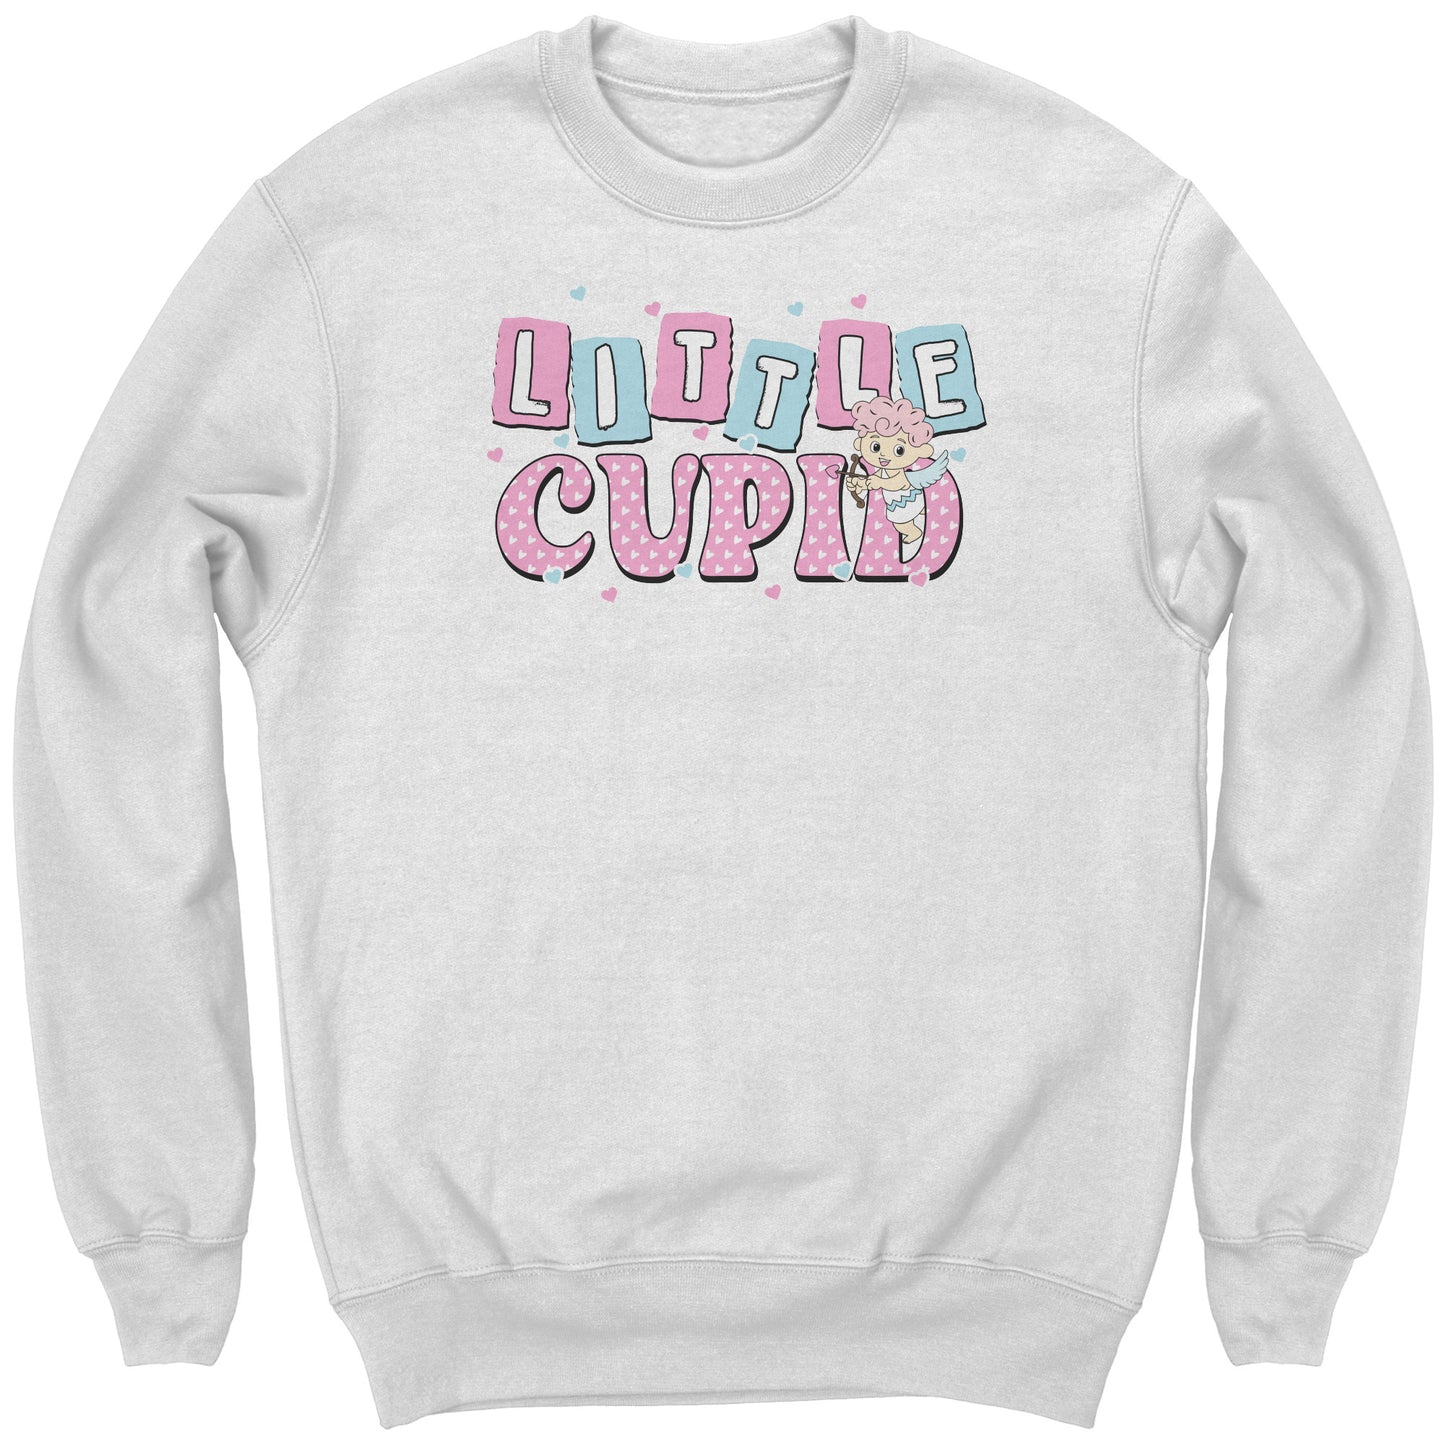 Little Cupid Sweatshirt